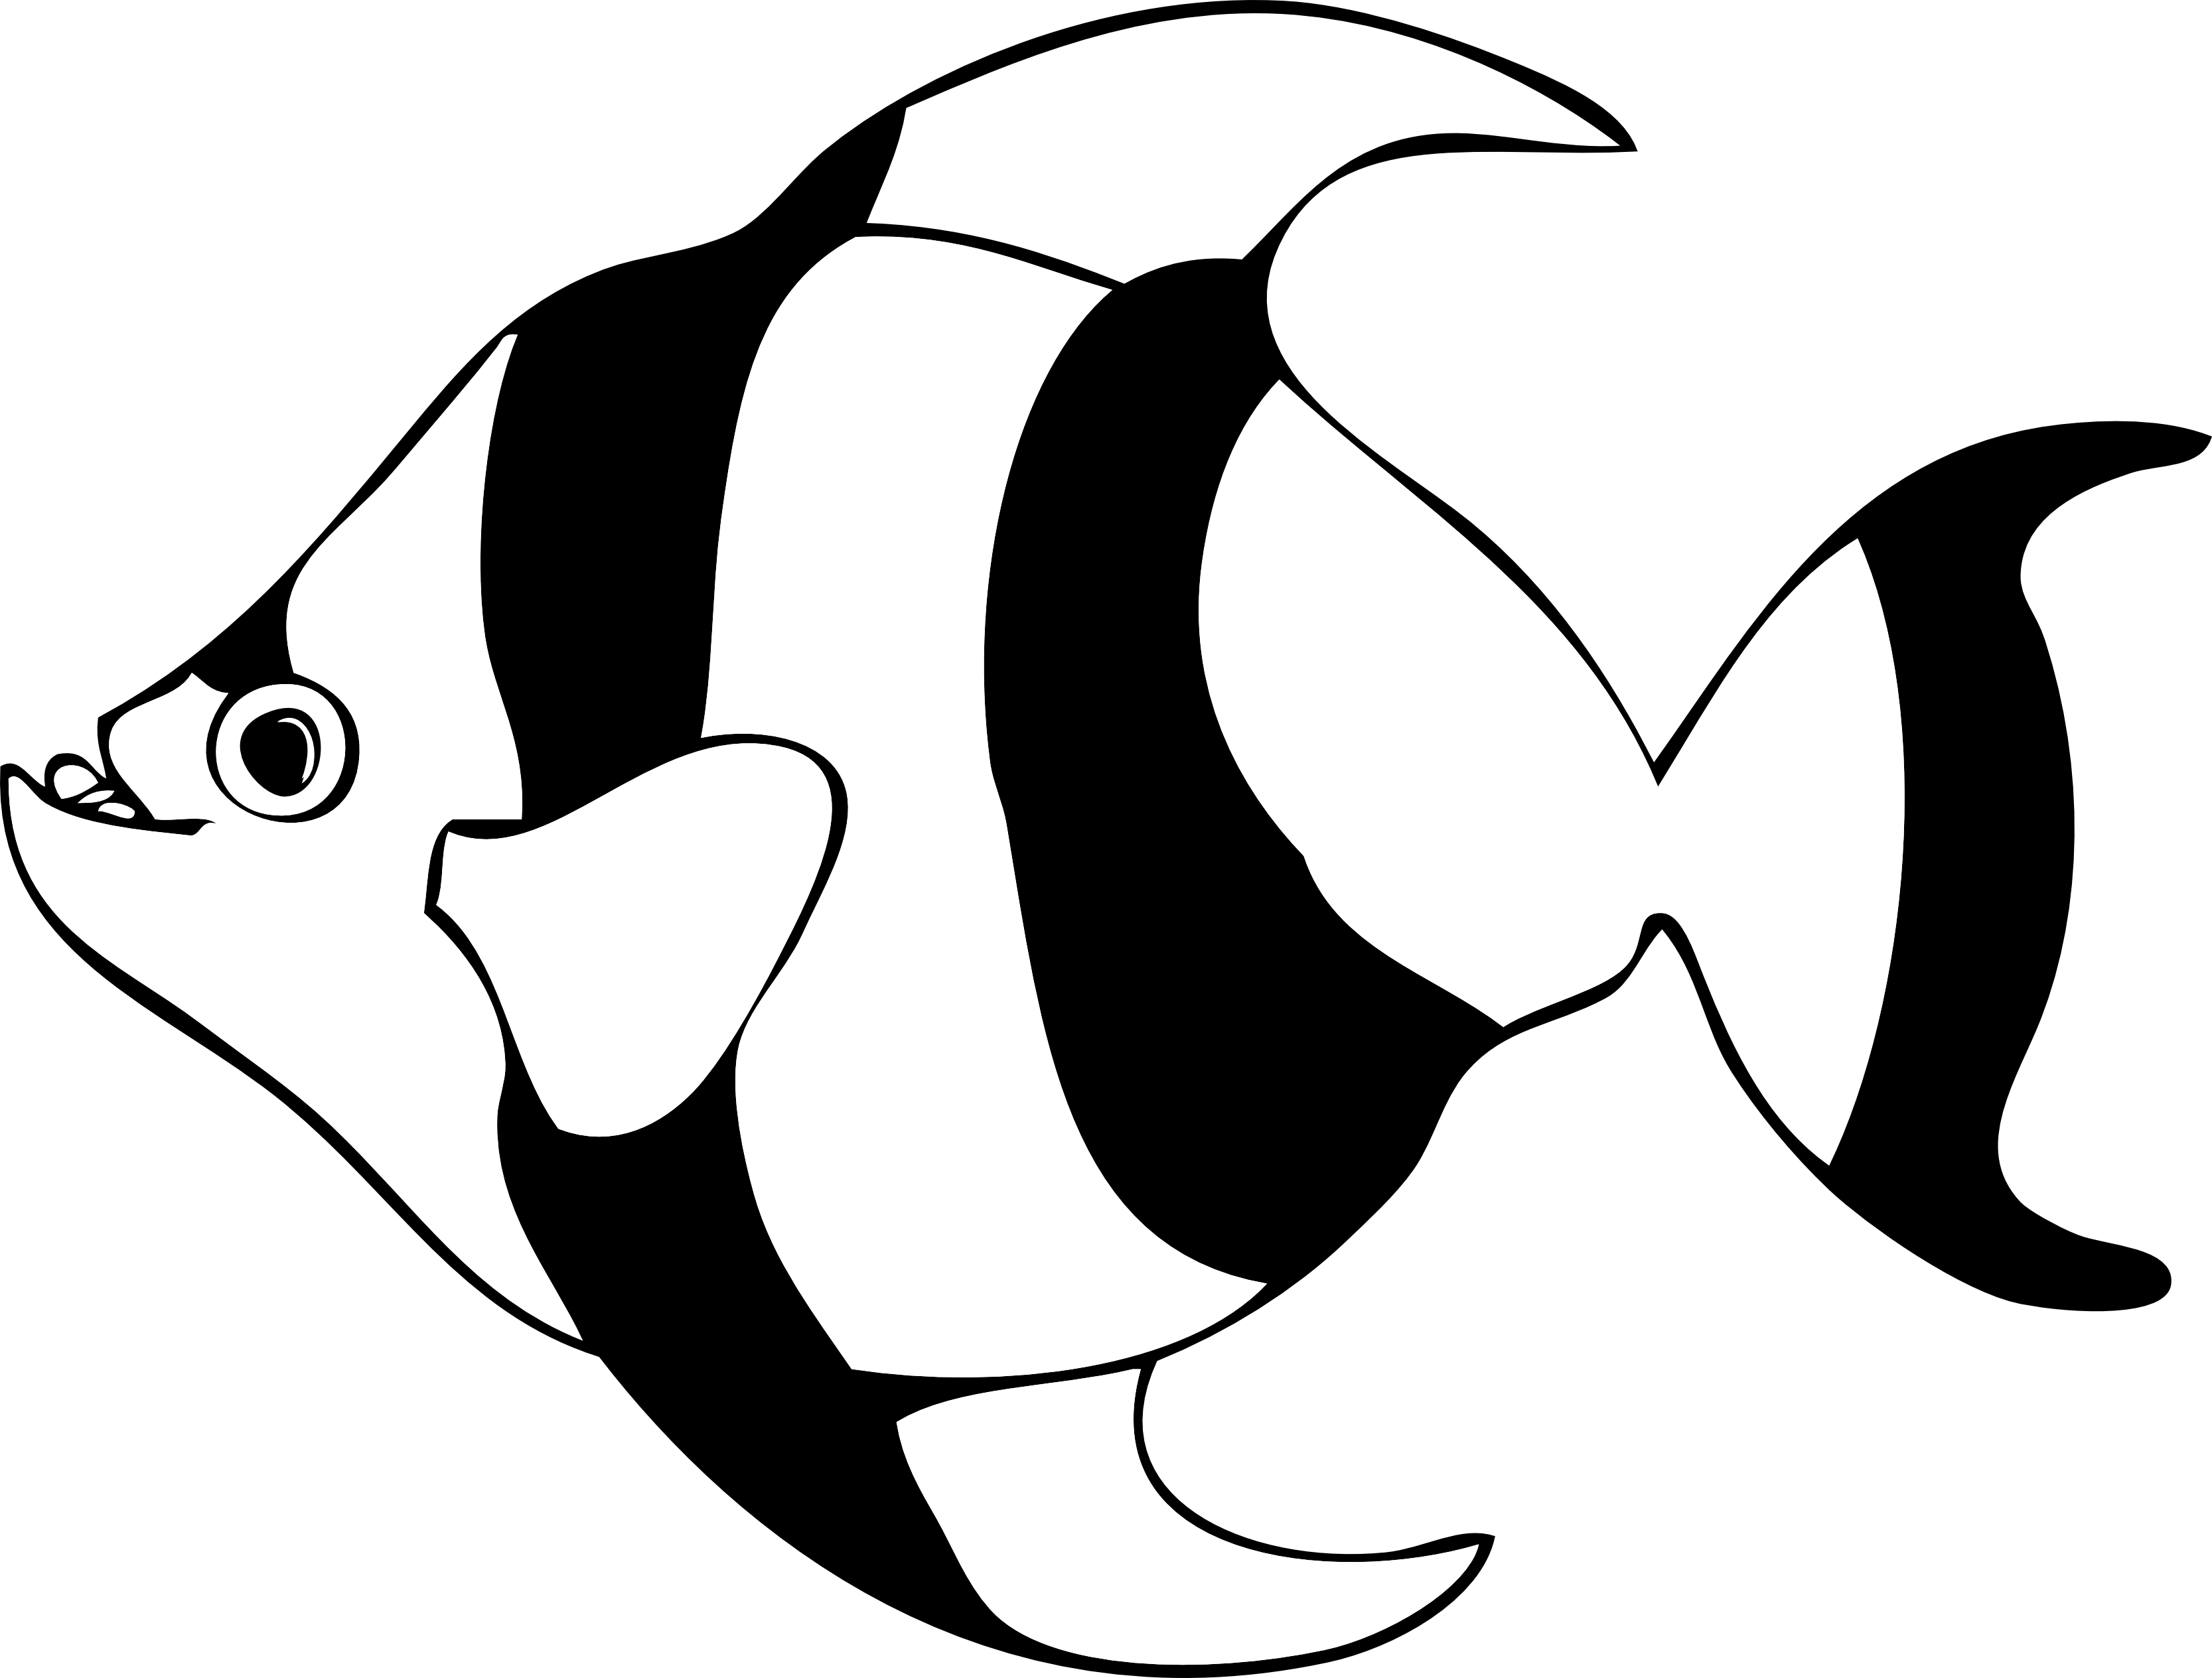 Fish Vector Art - Clipart library